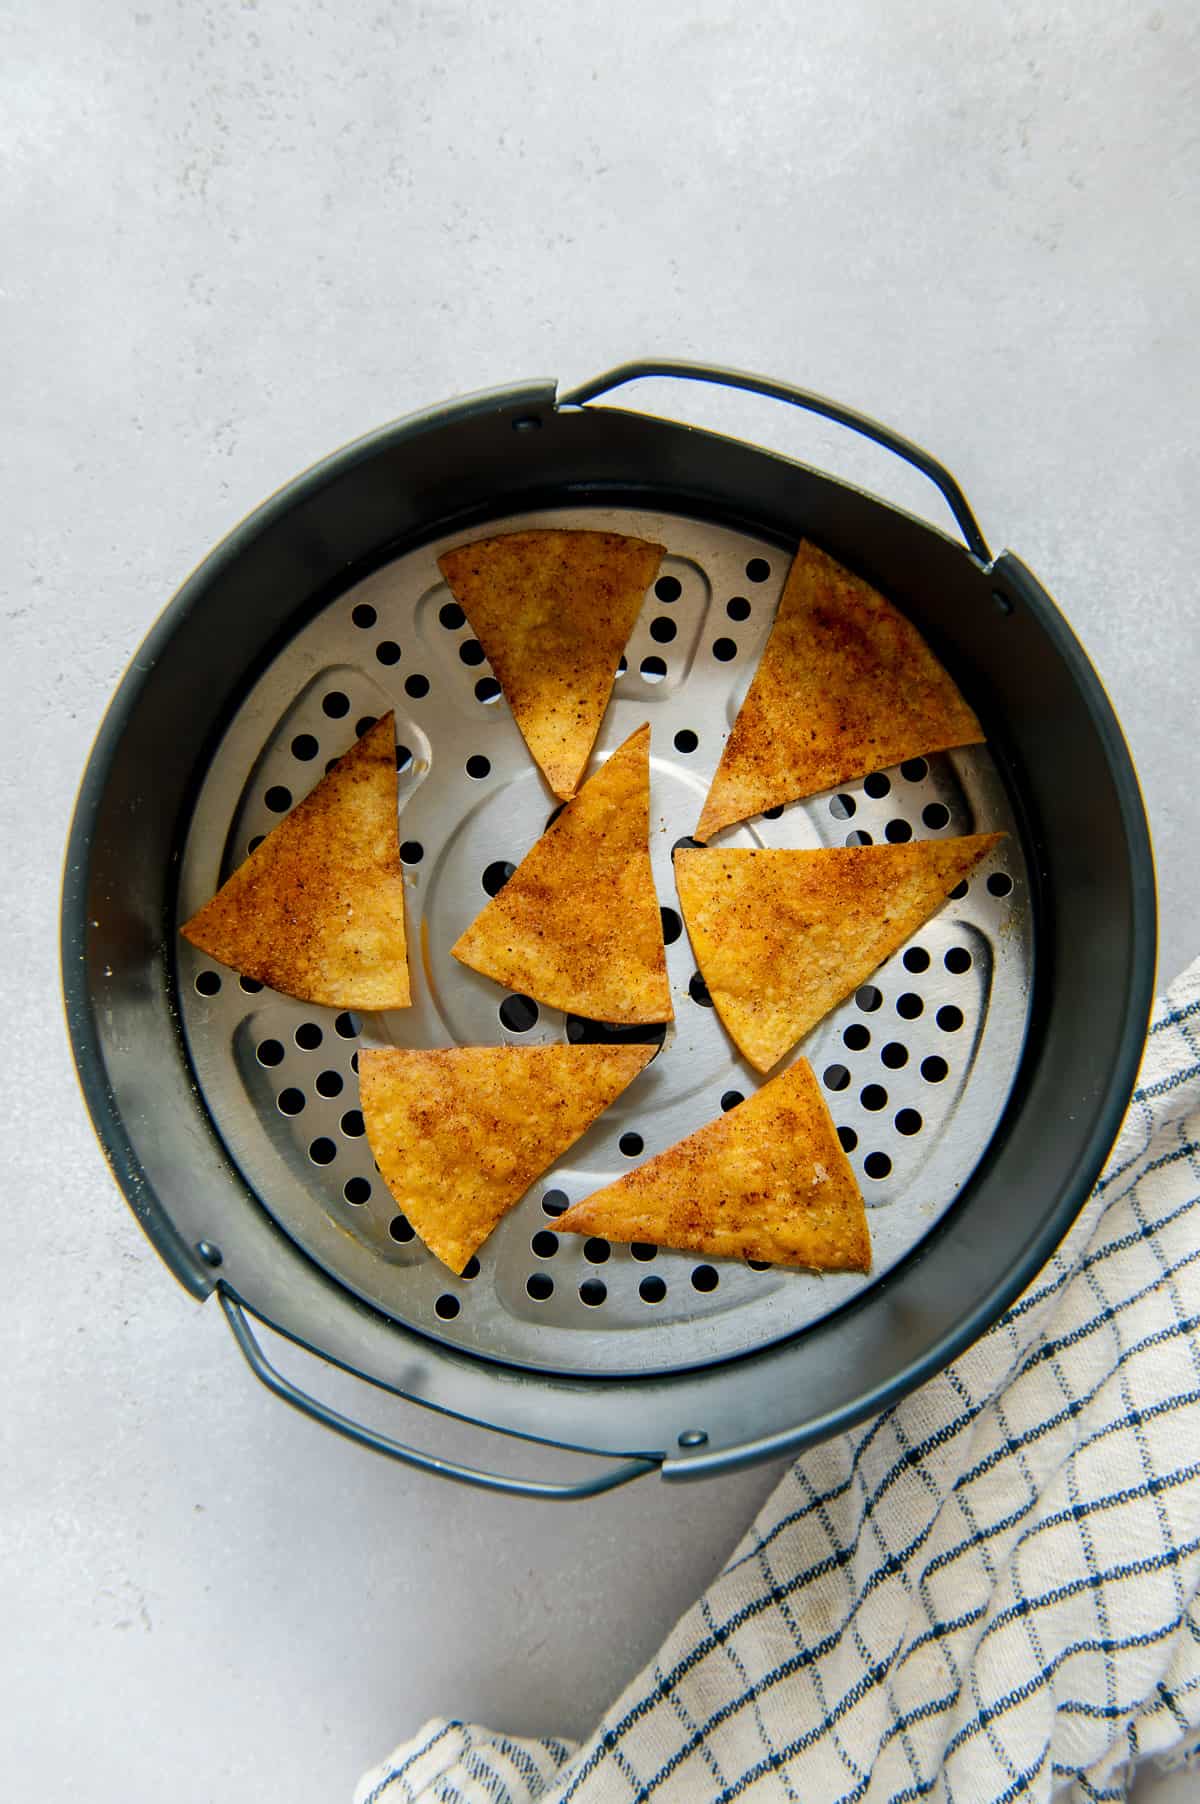 Crispy tortilla chips after cooking in an air fryer.